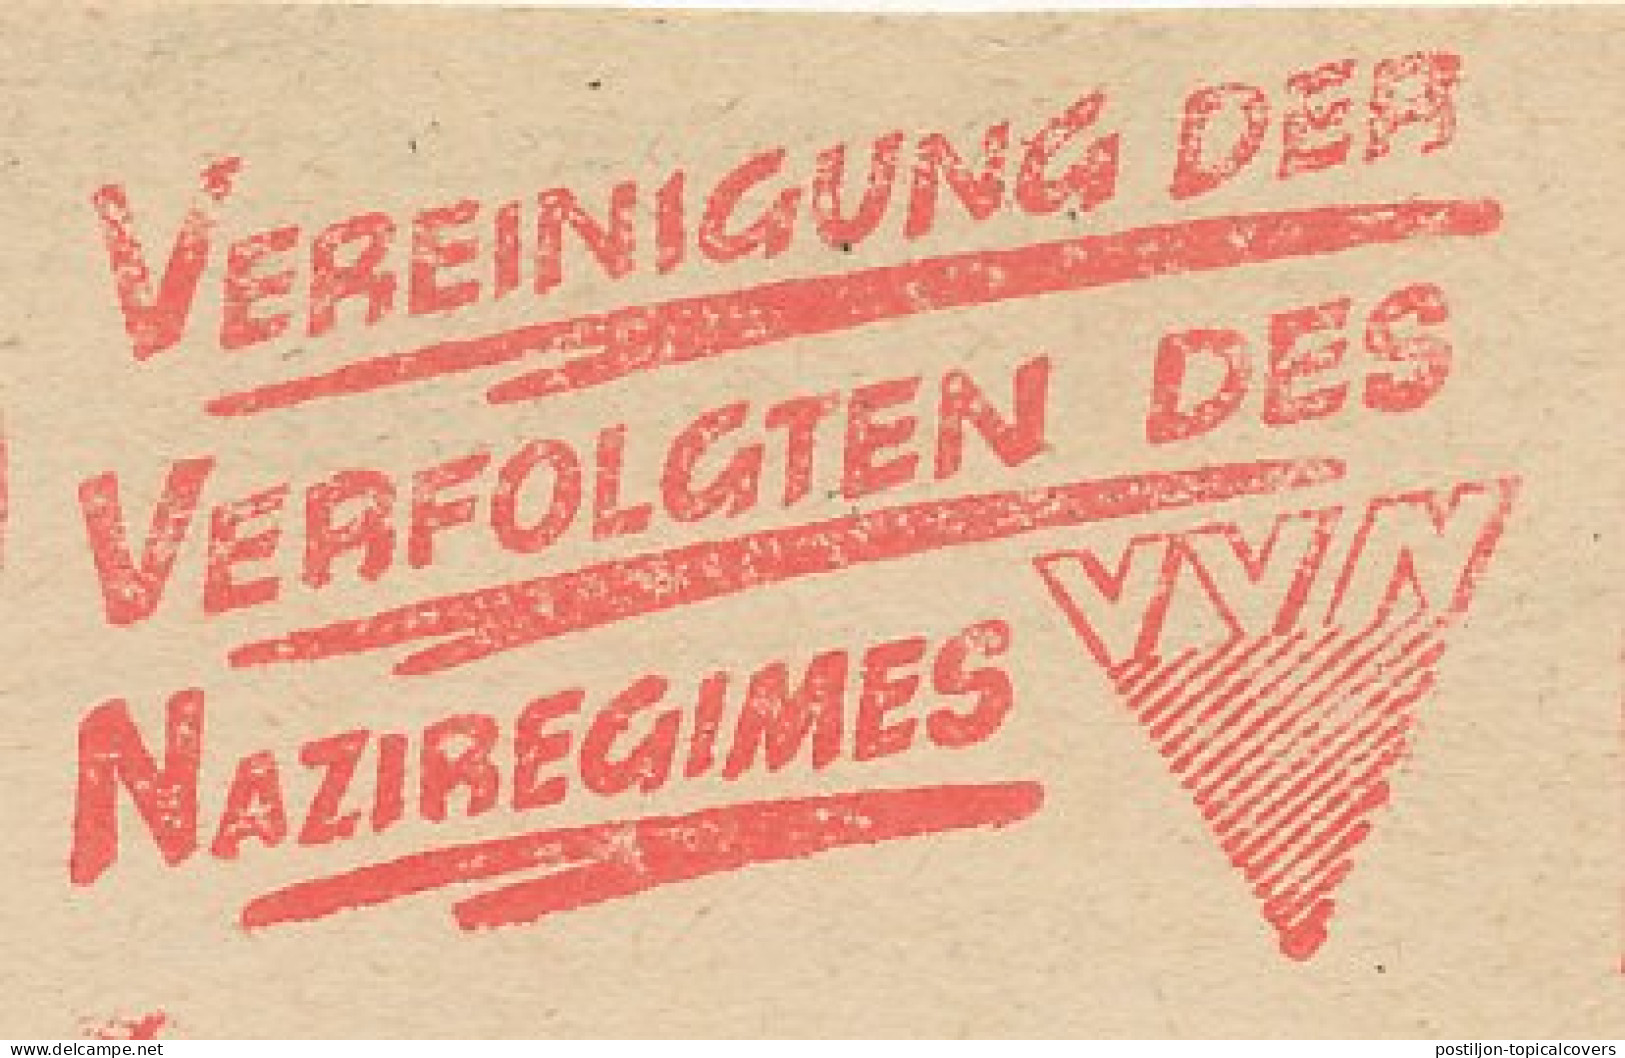 Meter Cut Deutsche Post / Germany 1949 The Association Of Persecutees Of The Nazi Regime - VVN - Non Classés